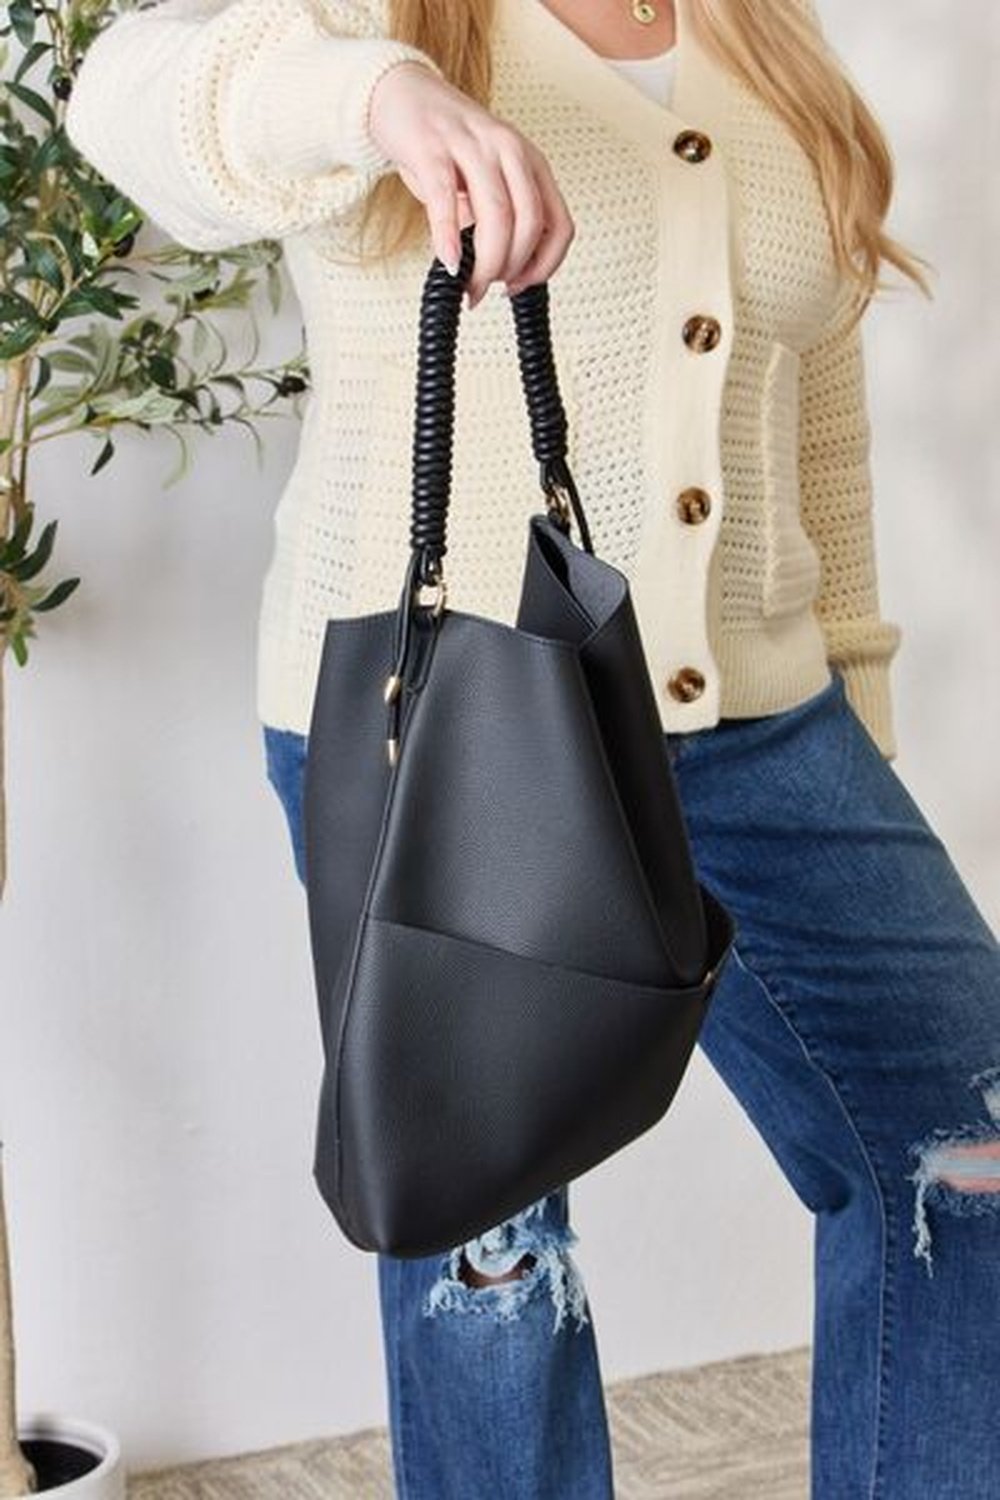 SHOMICO Vegan Leather Handbag with Pouch - Handbag - FITGGINS